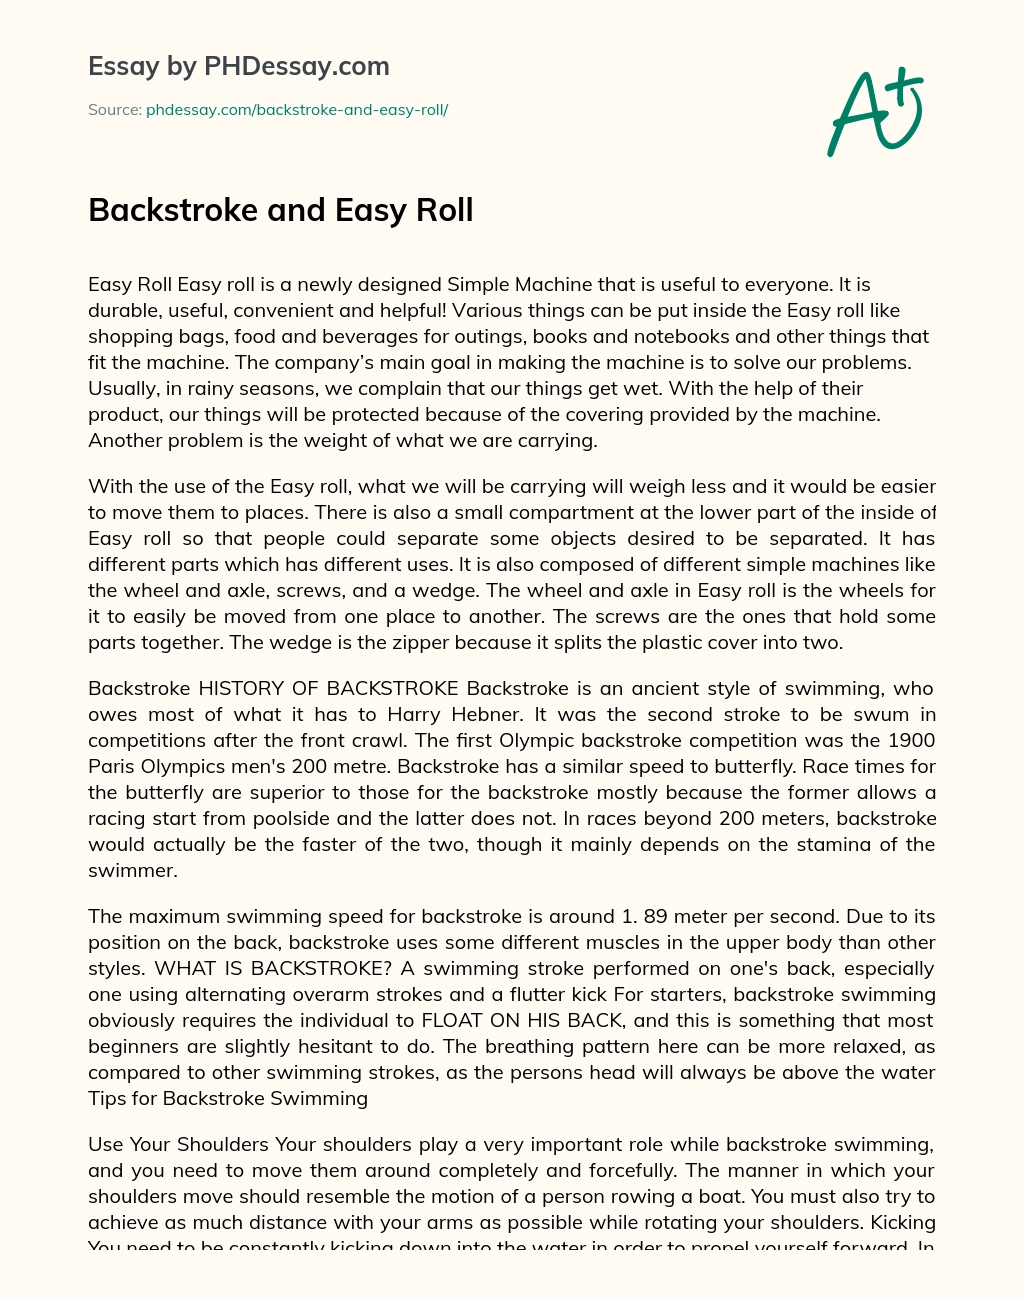 Backstroke and Easy Roll essay